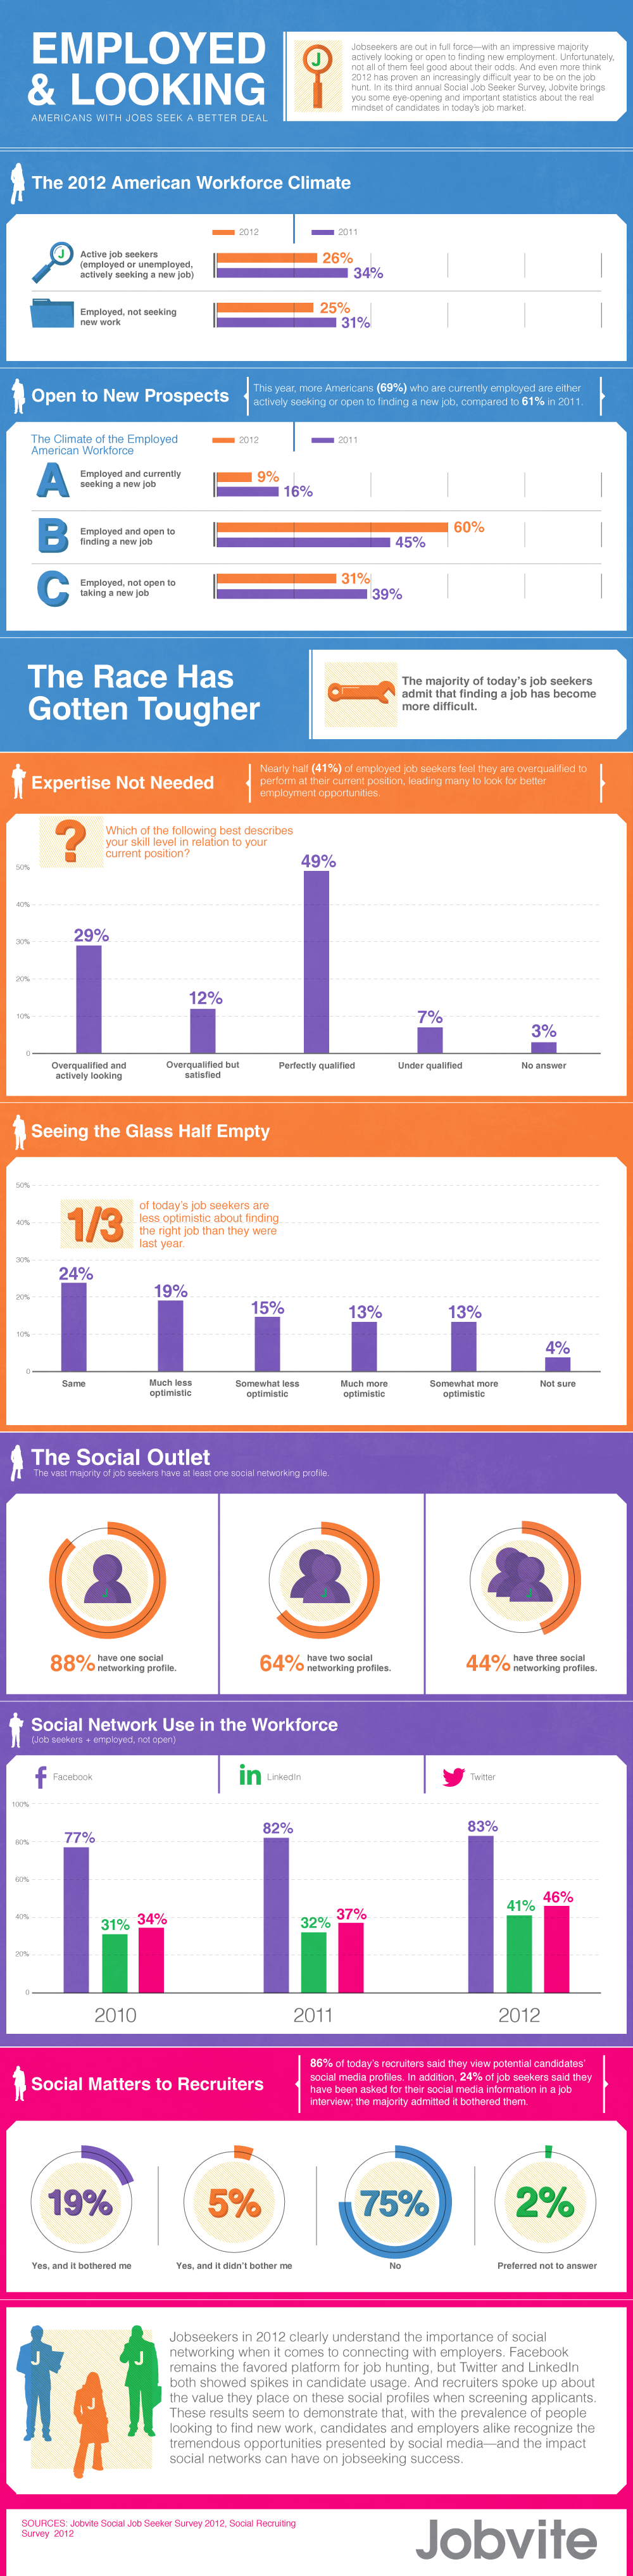 Jobvite Social Job Seeker Survey Results 2012